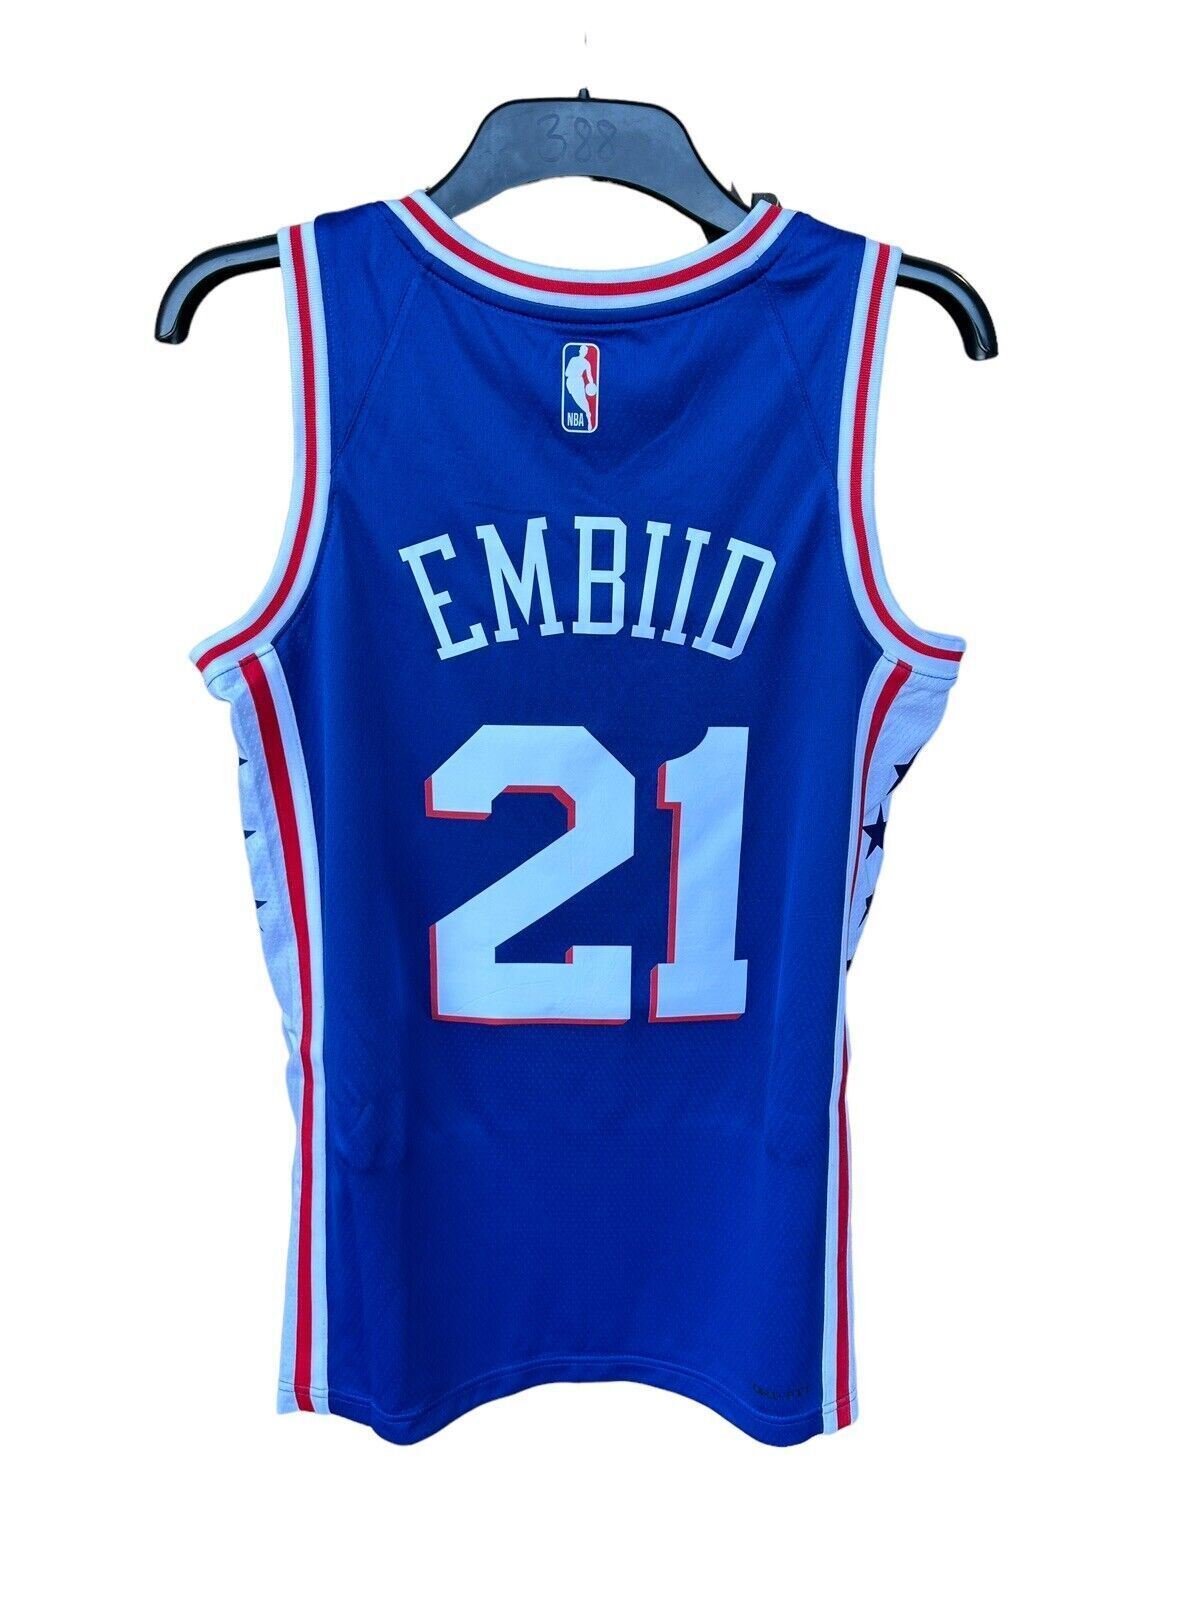 Nike NBA Philadelphia 76ers Icon Edition Jersey EMBIID 21 Men’s Small